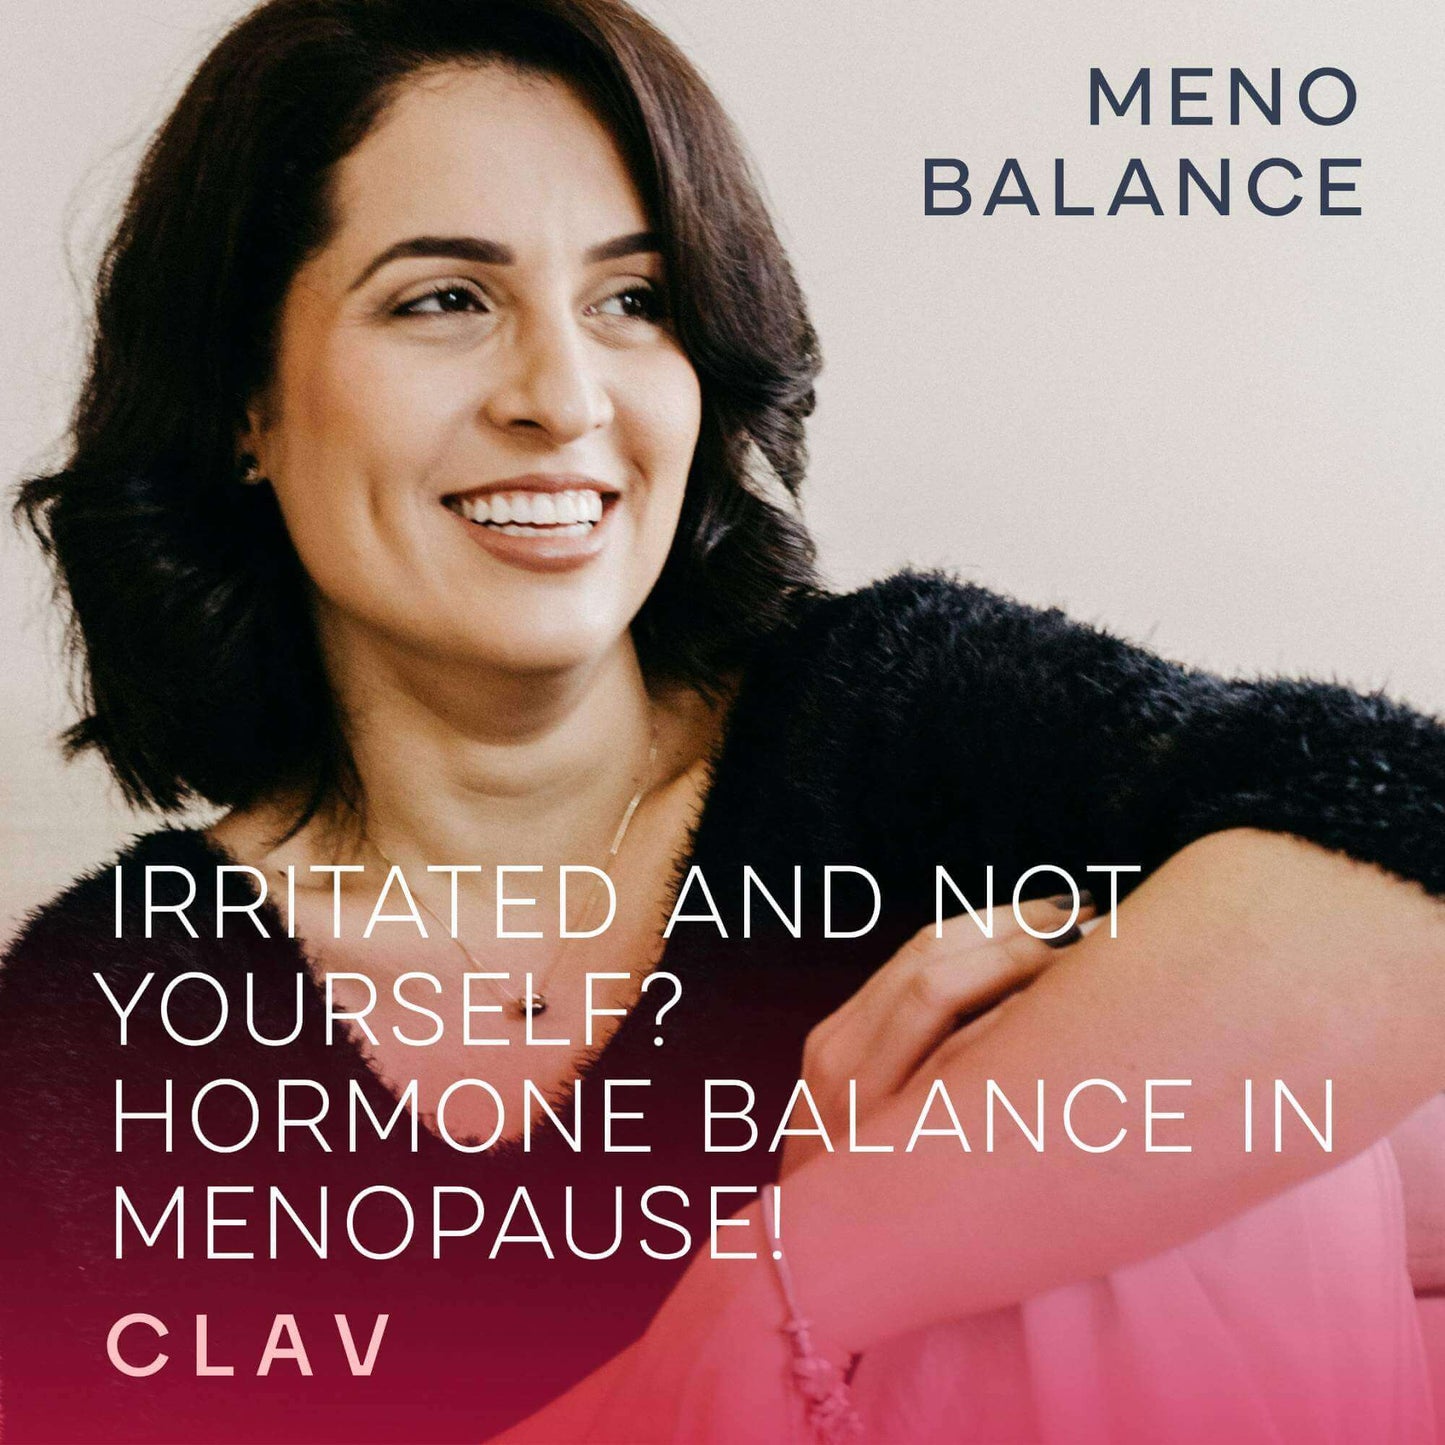 Meno Balance hormone balance 45+